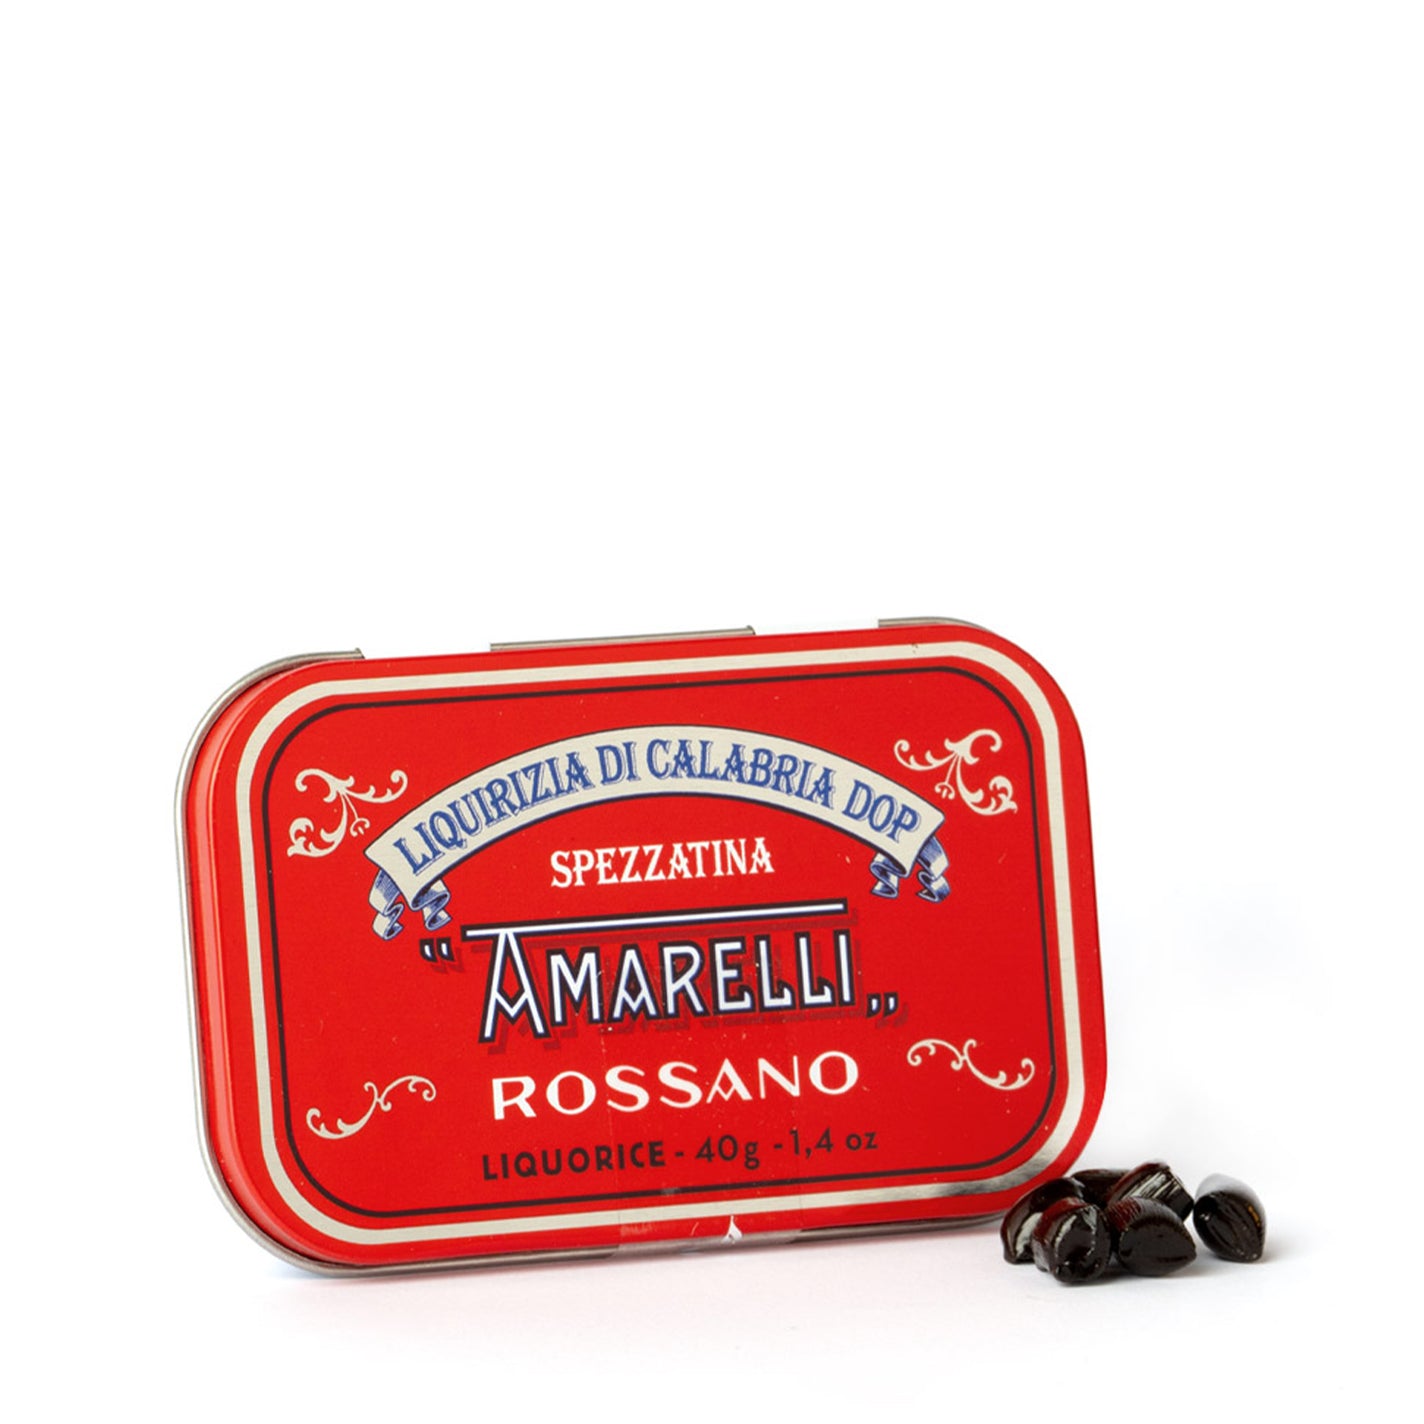 Amarelli Rossano Pure Liquorice Tin (Red) - 40g